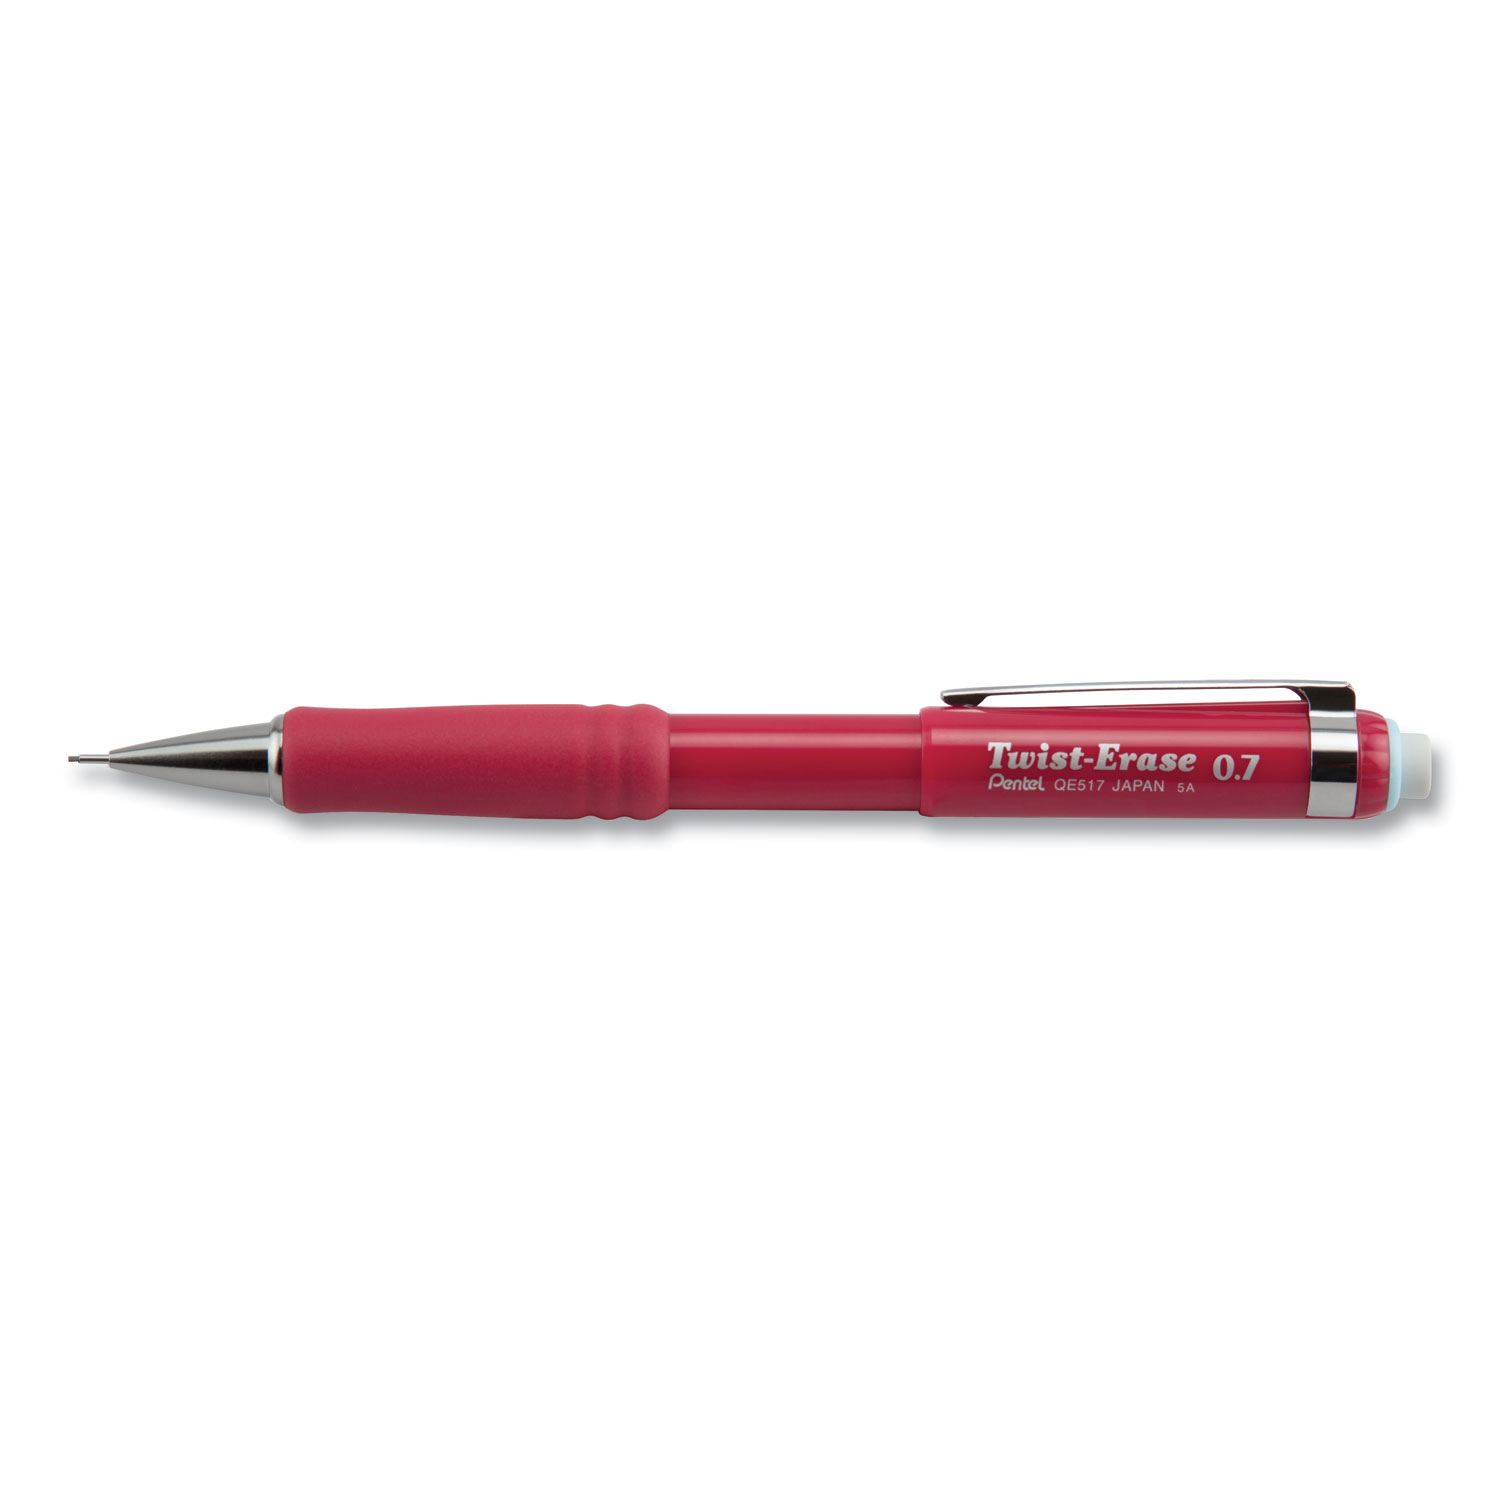  Pentel QE517B Twist-Erase III Mechanical Pencil, 0.7 mm, HB (#2.5), Black Lead, Red Barrel (PENQE517B) 